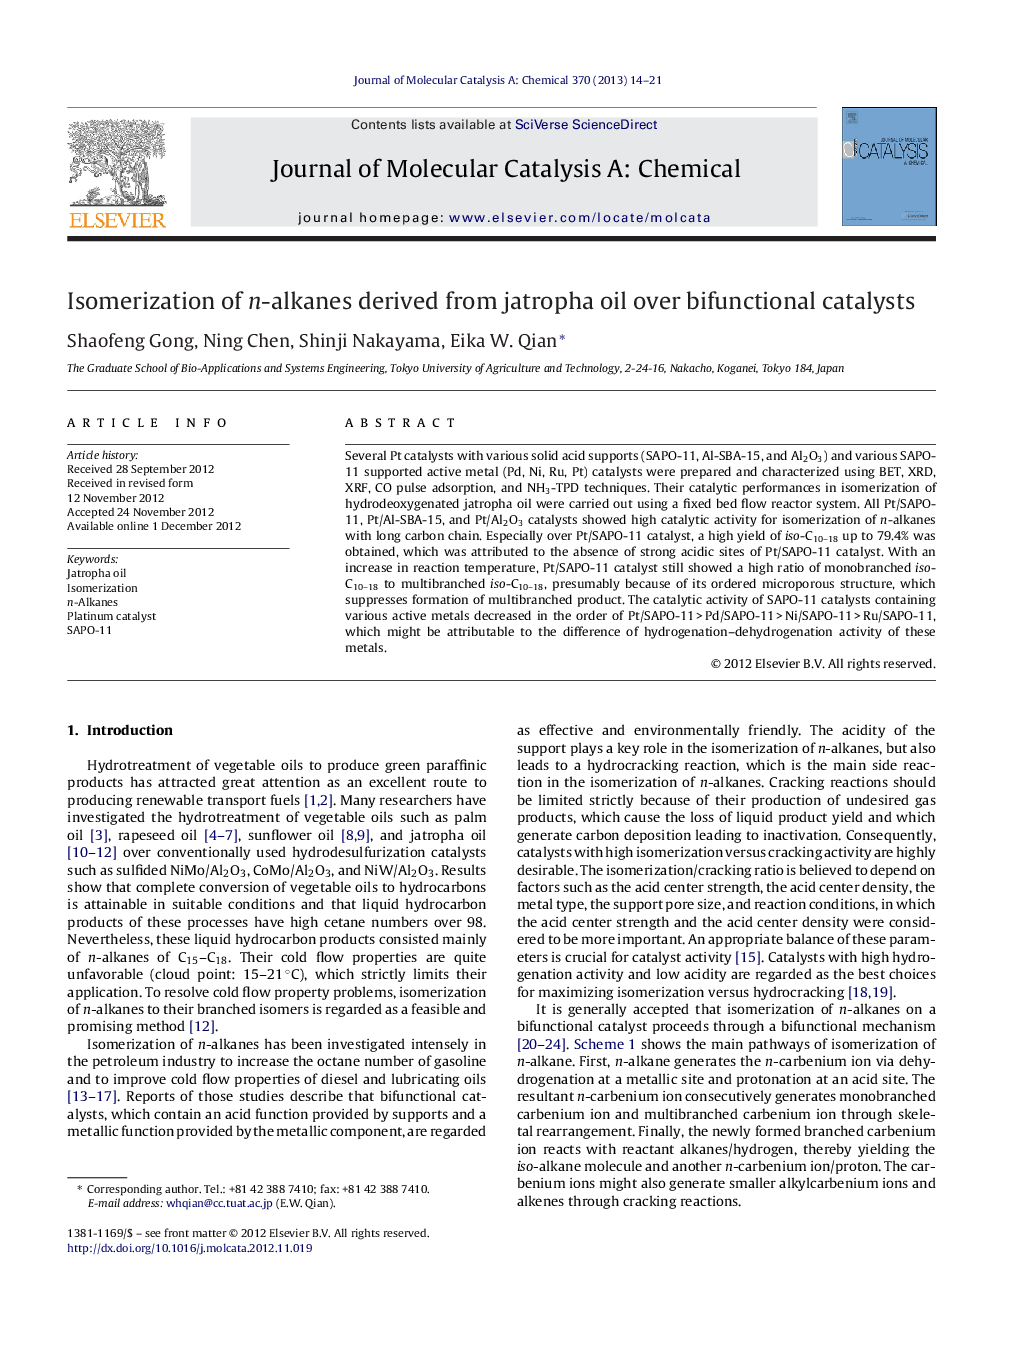 Isomerization of n-alkanes derived from jatropha oil over bifunctional catalysts